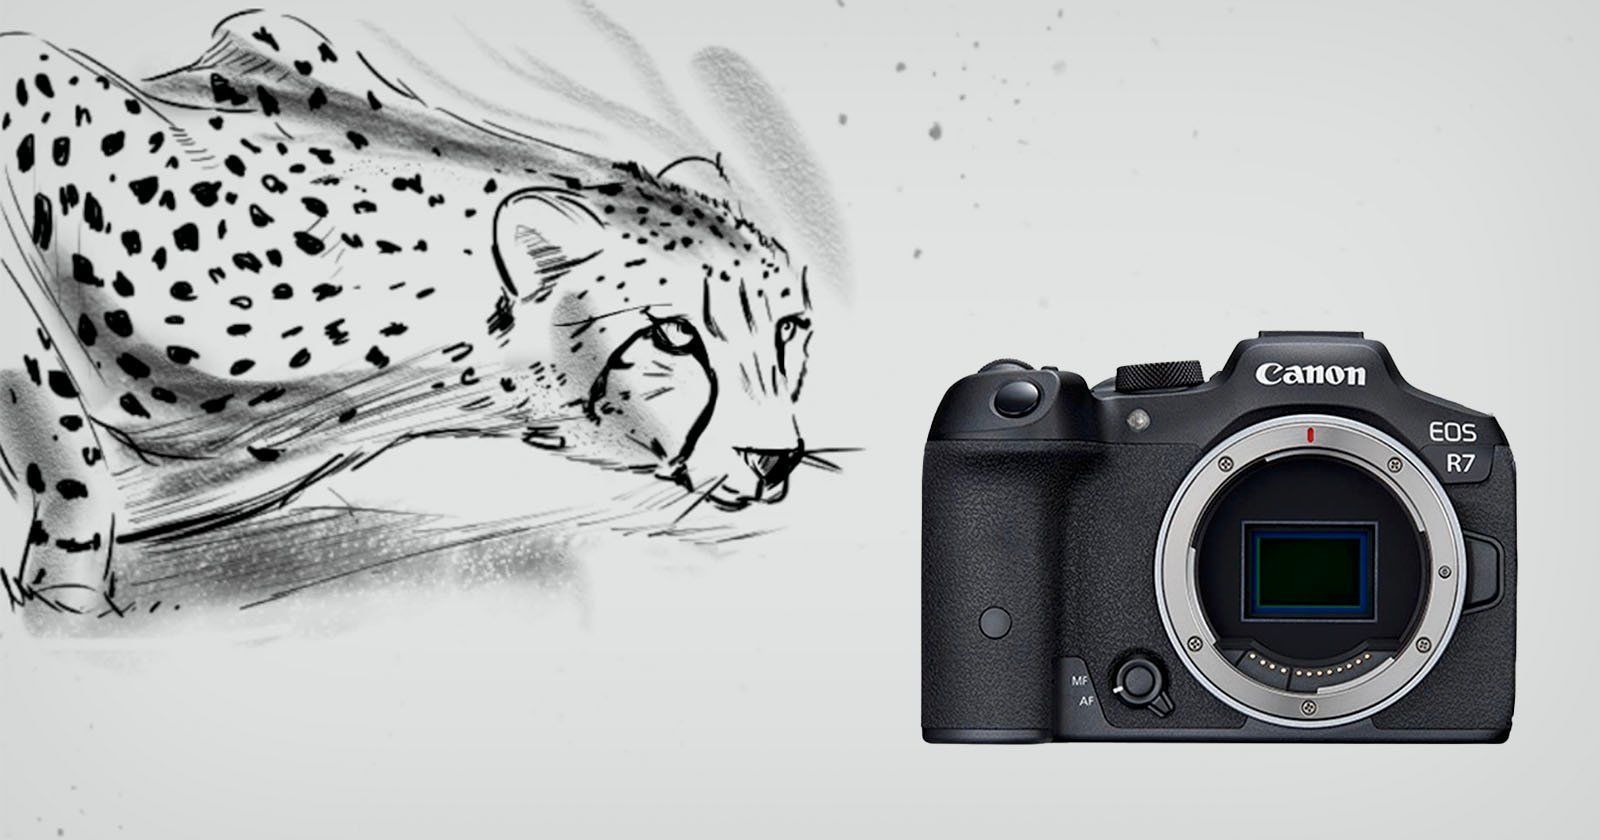 A Cheetah Preparing to Strike Inspired the Canon EOS R7s Design